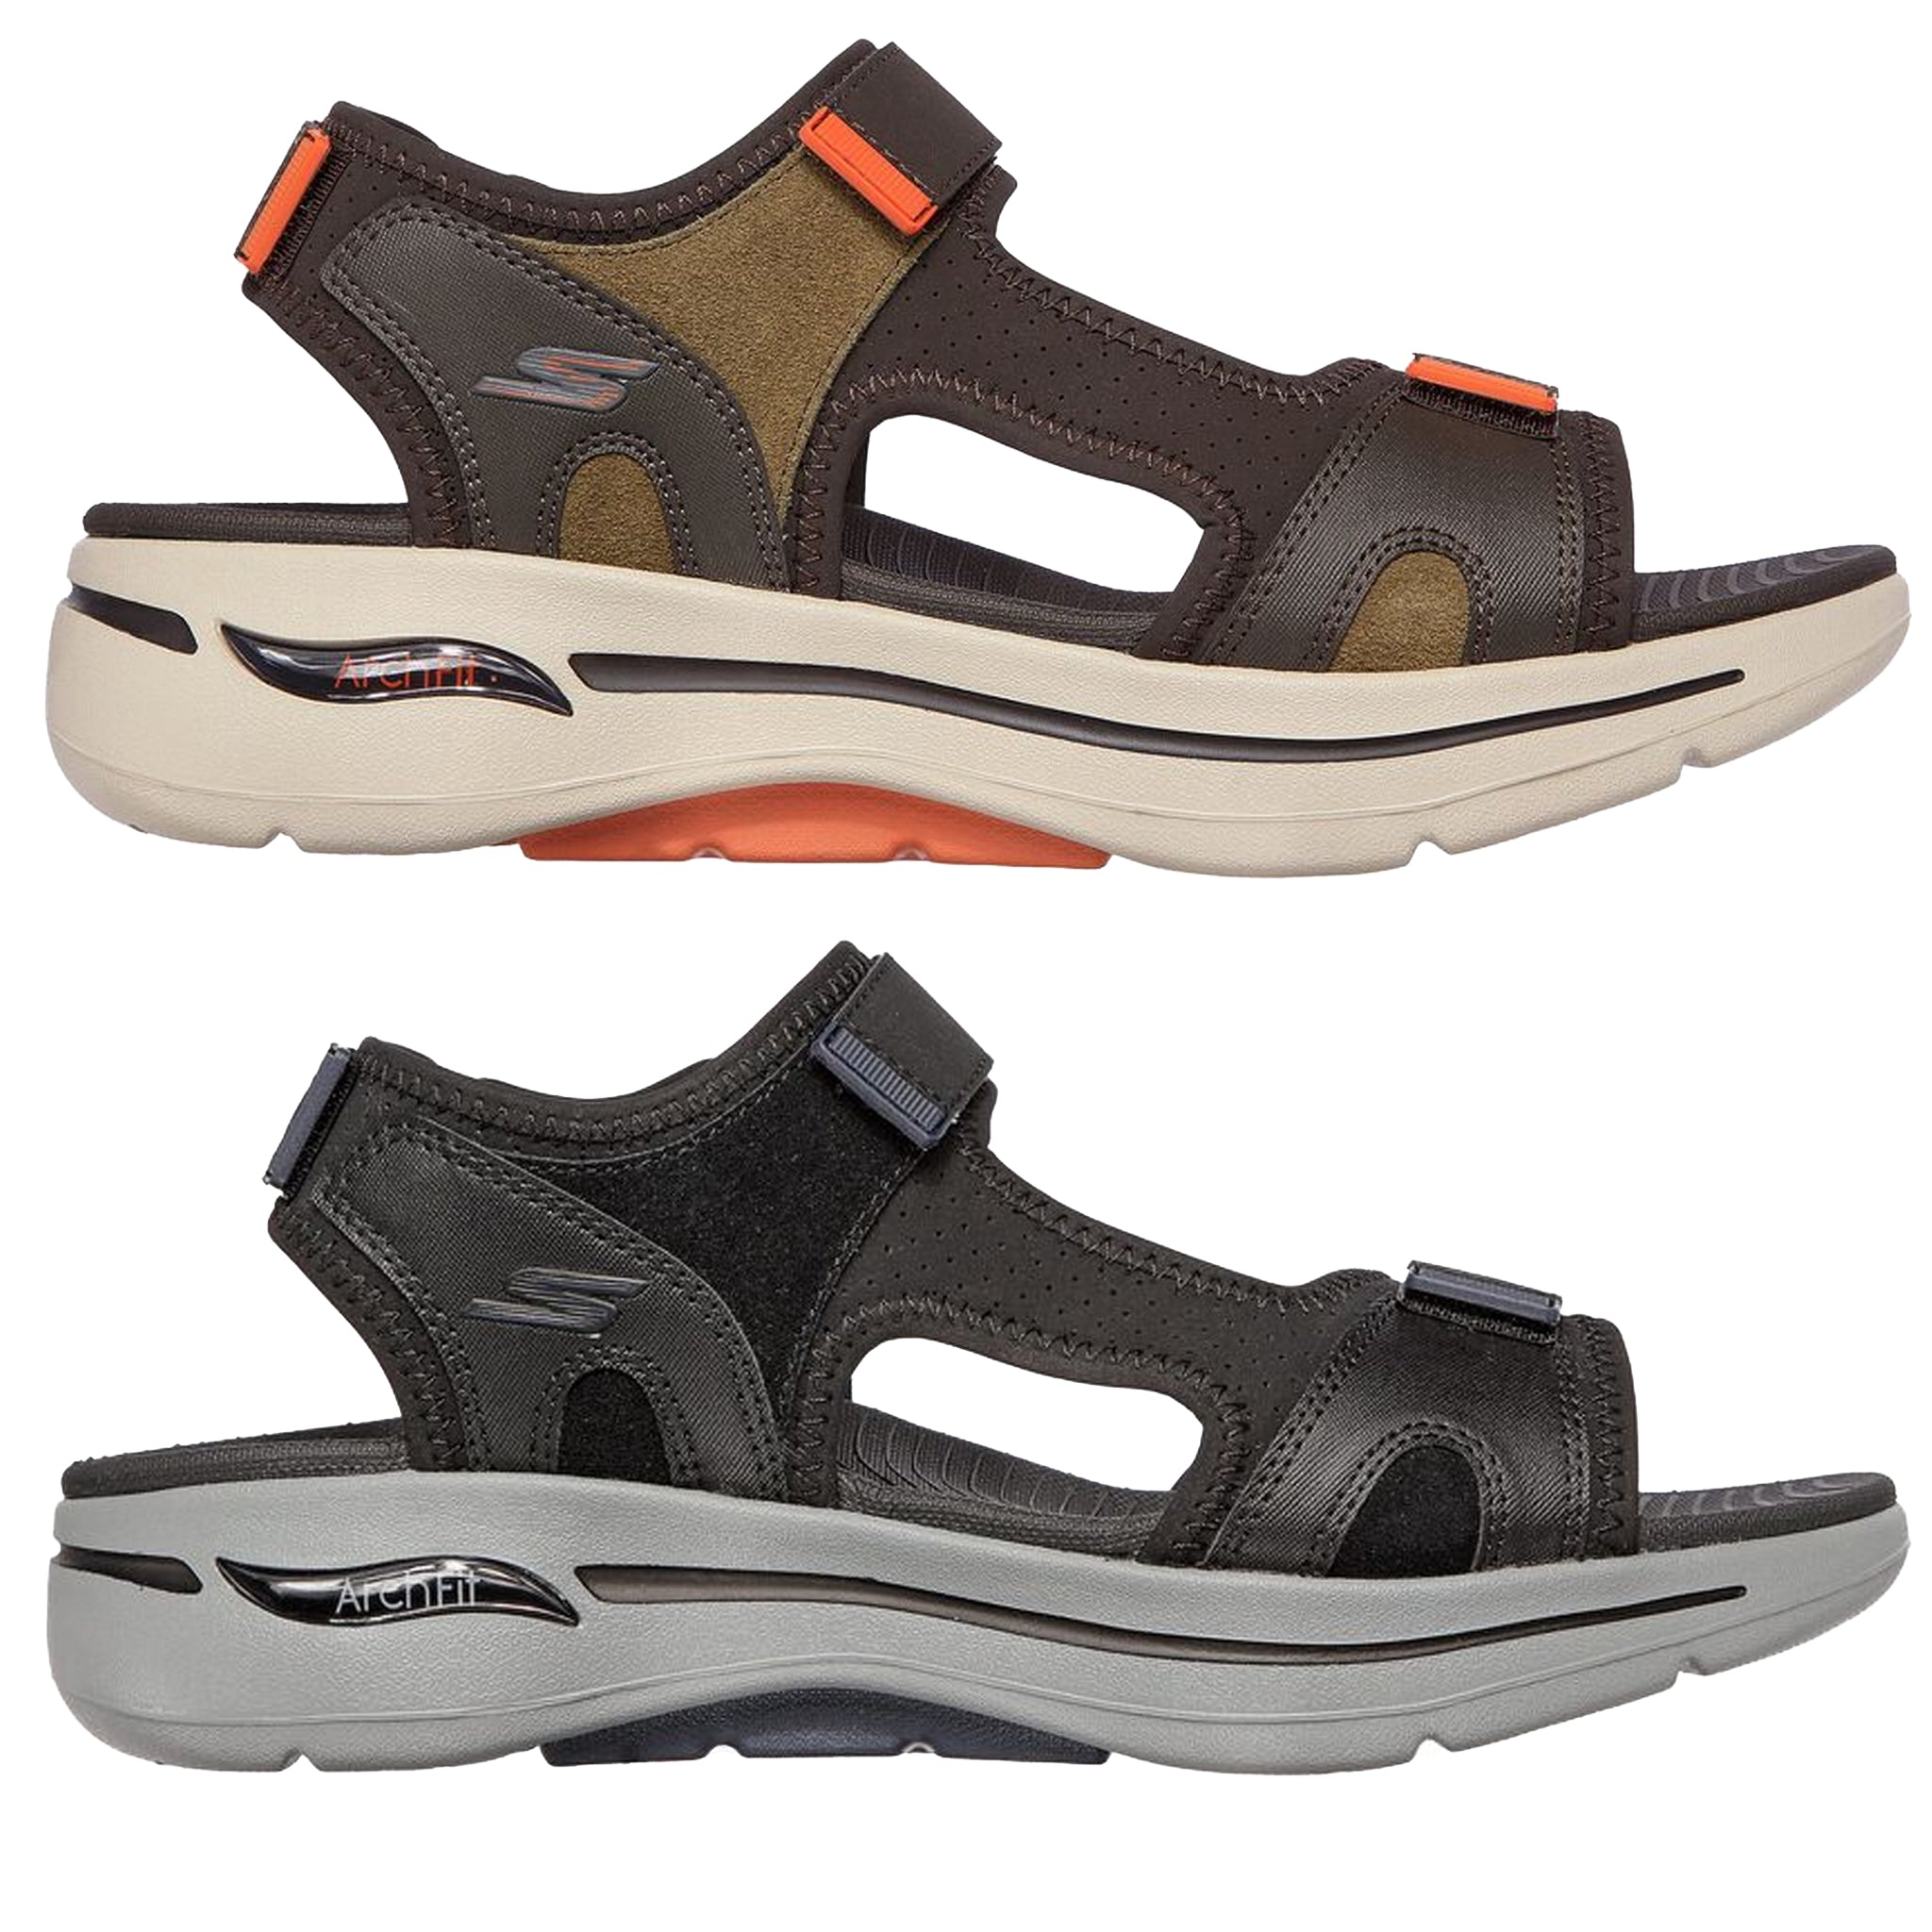 Skechers Men's 229021 Go Walk Arch Fit Sandal Mission Strap Sandals That Shoe Store and More